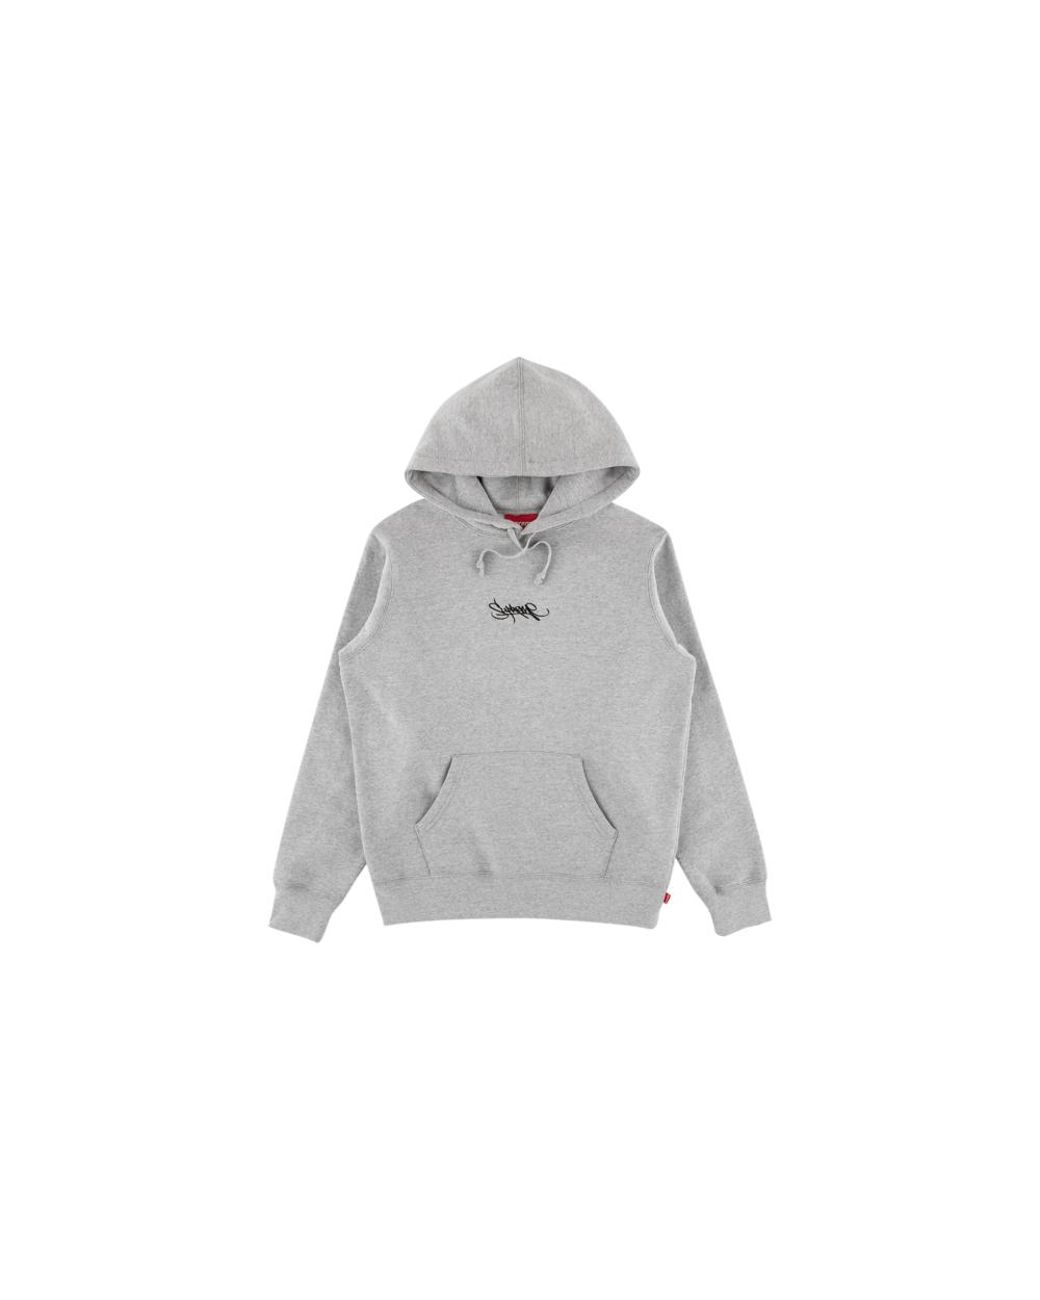 Supreme Tag Logo Hoodie Sweatshirt 'ss 19' in Gray for Men - Lyst